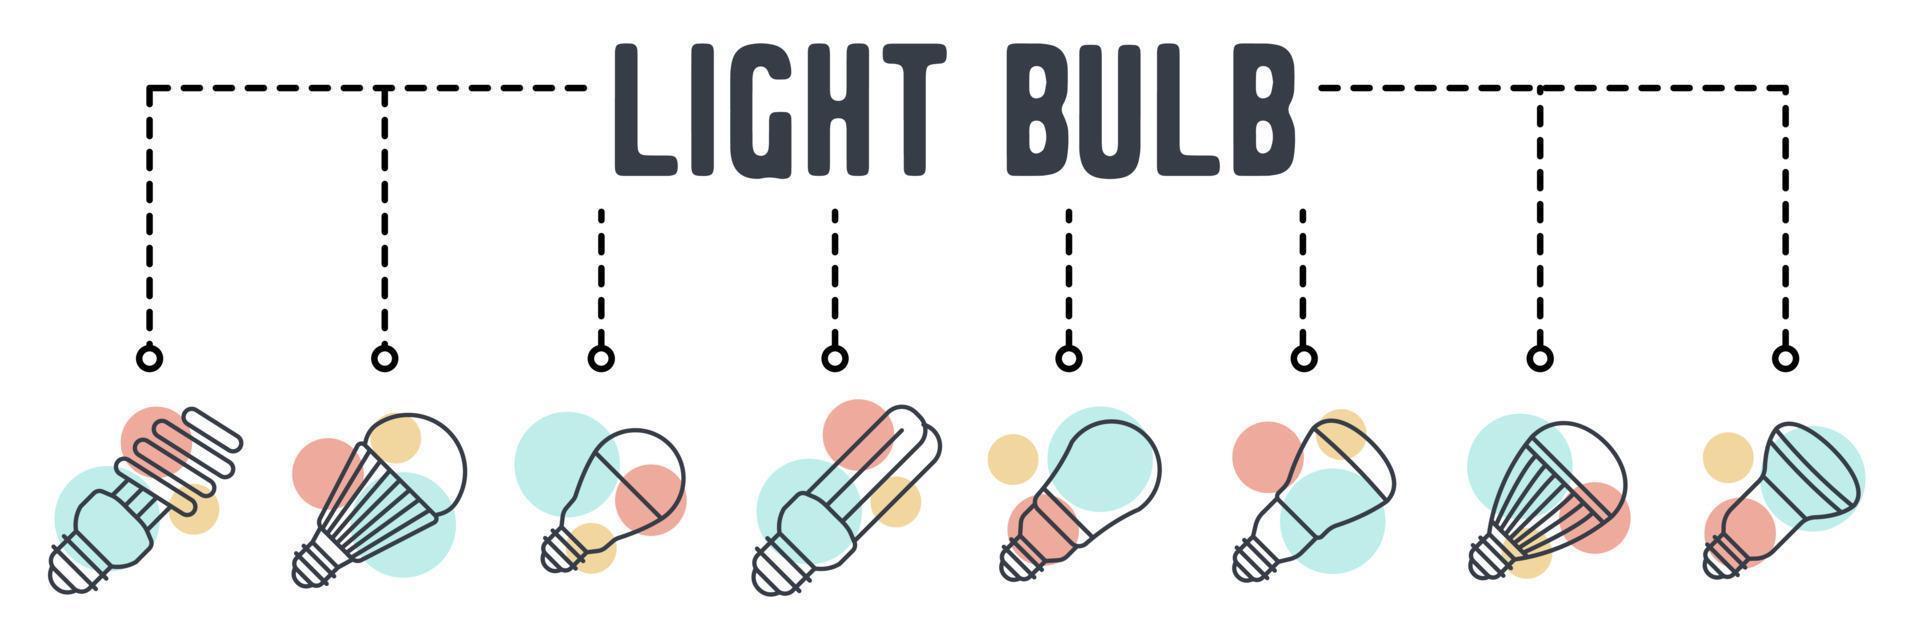 light bulb. led lamp banner web icon vector illustration concept.